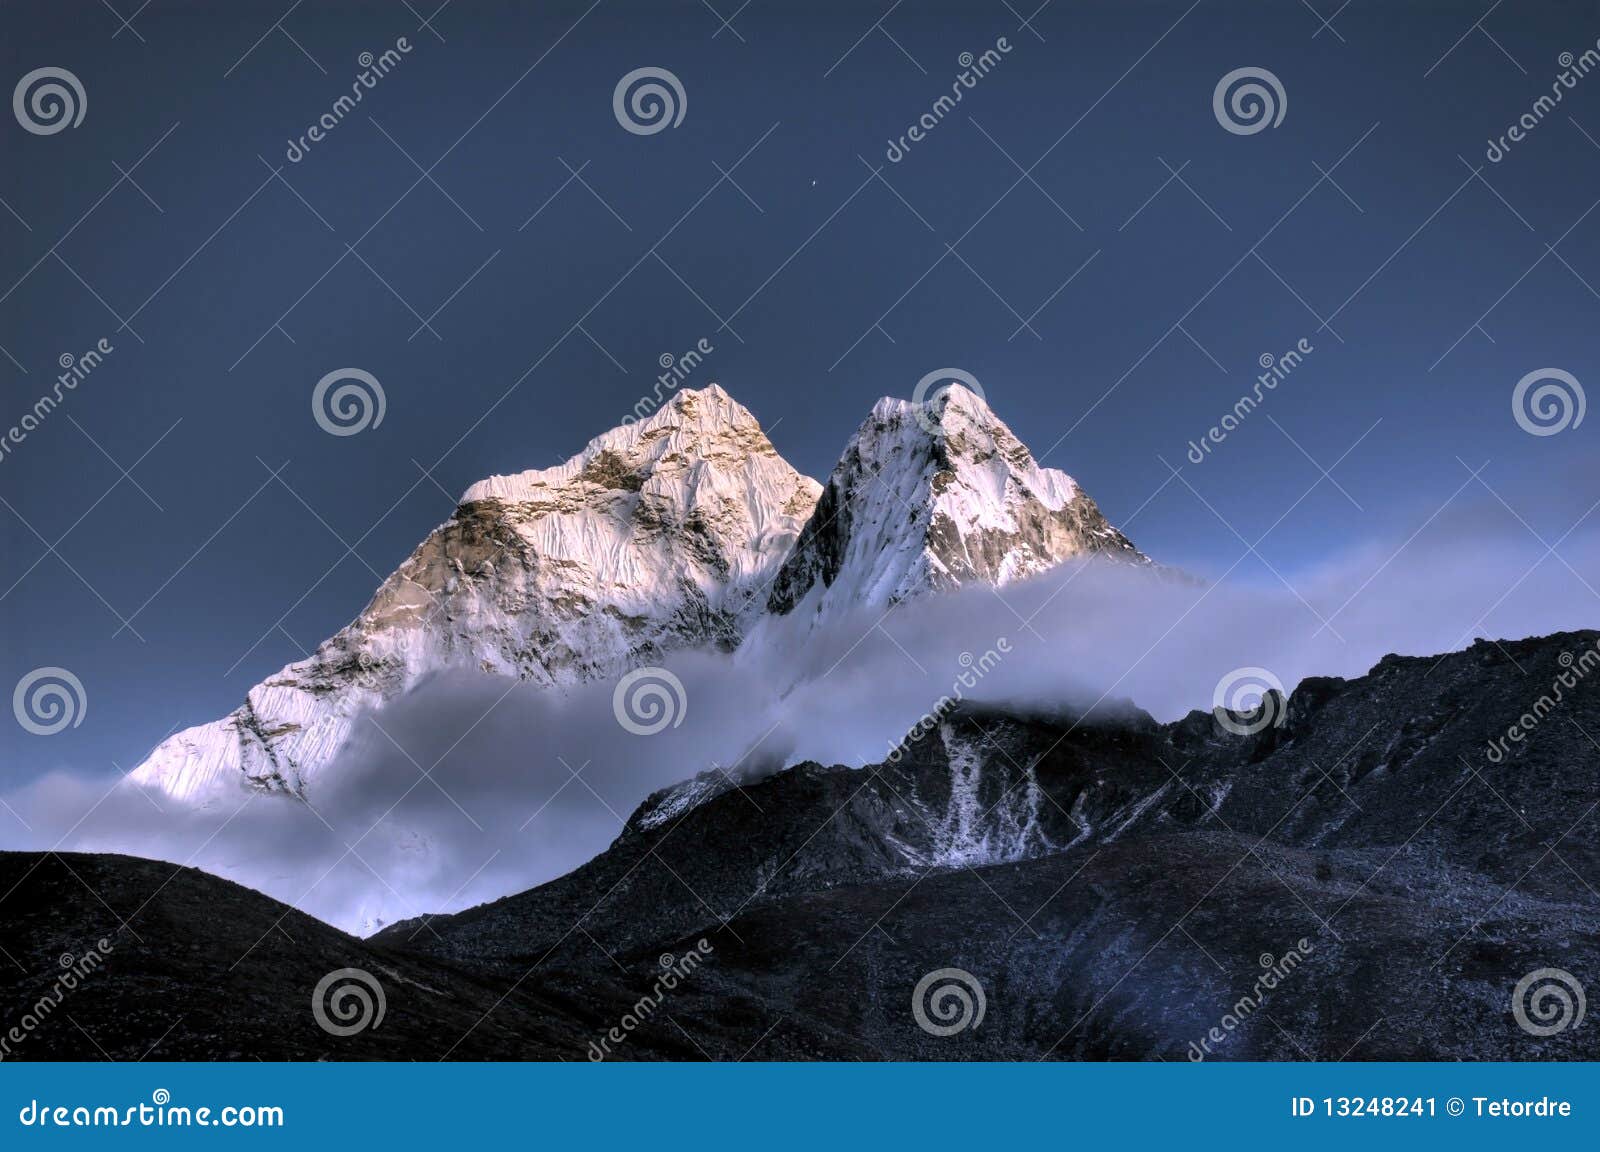 ama dablam. mountain in the himalayas, nepal